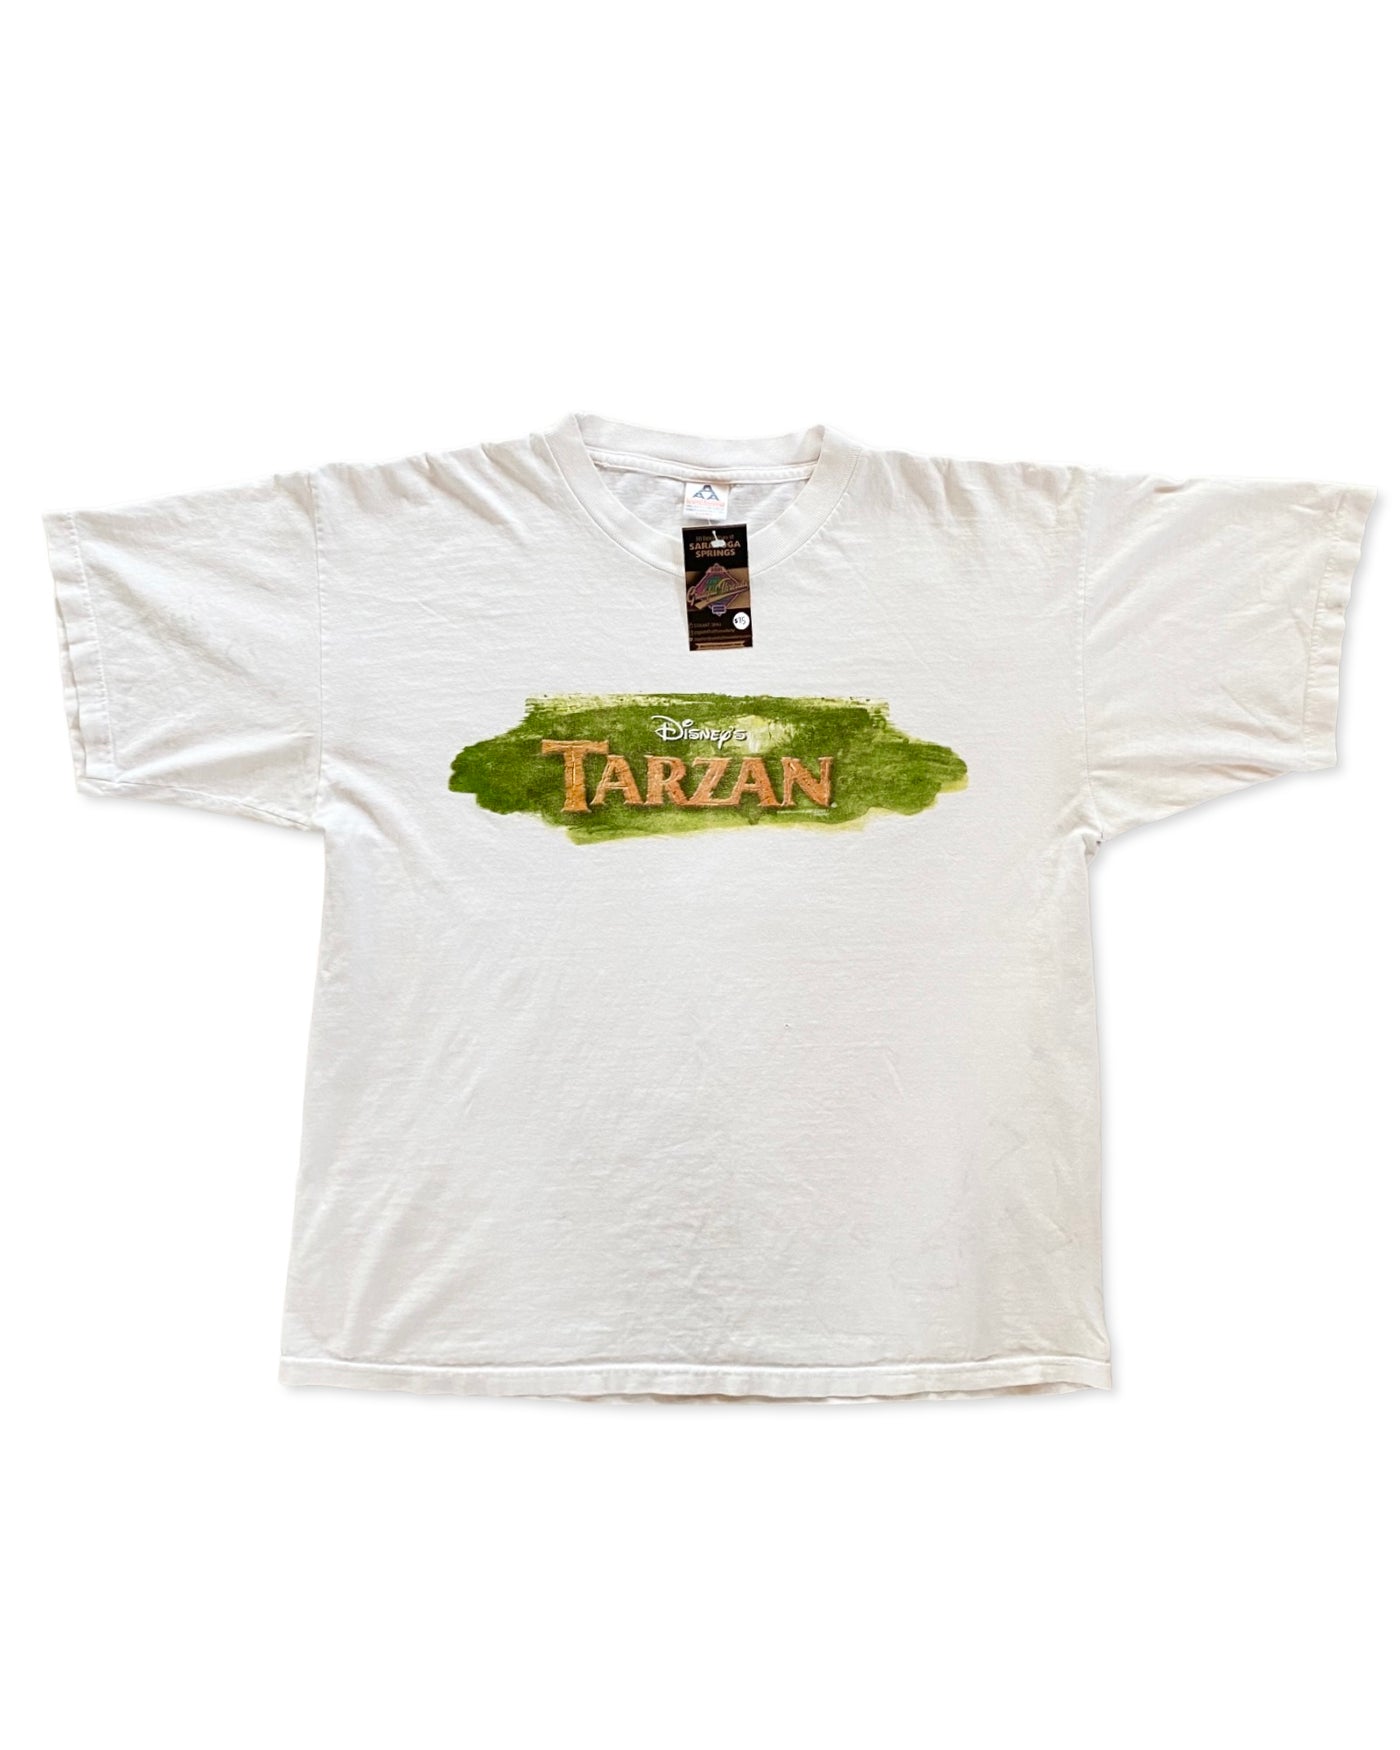 Vintage Tarzan Movie Promo T-Shirt